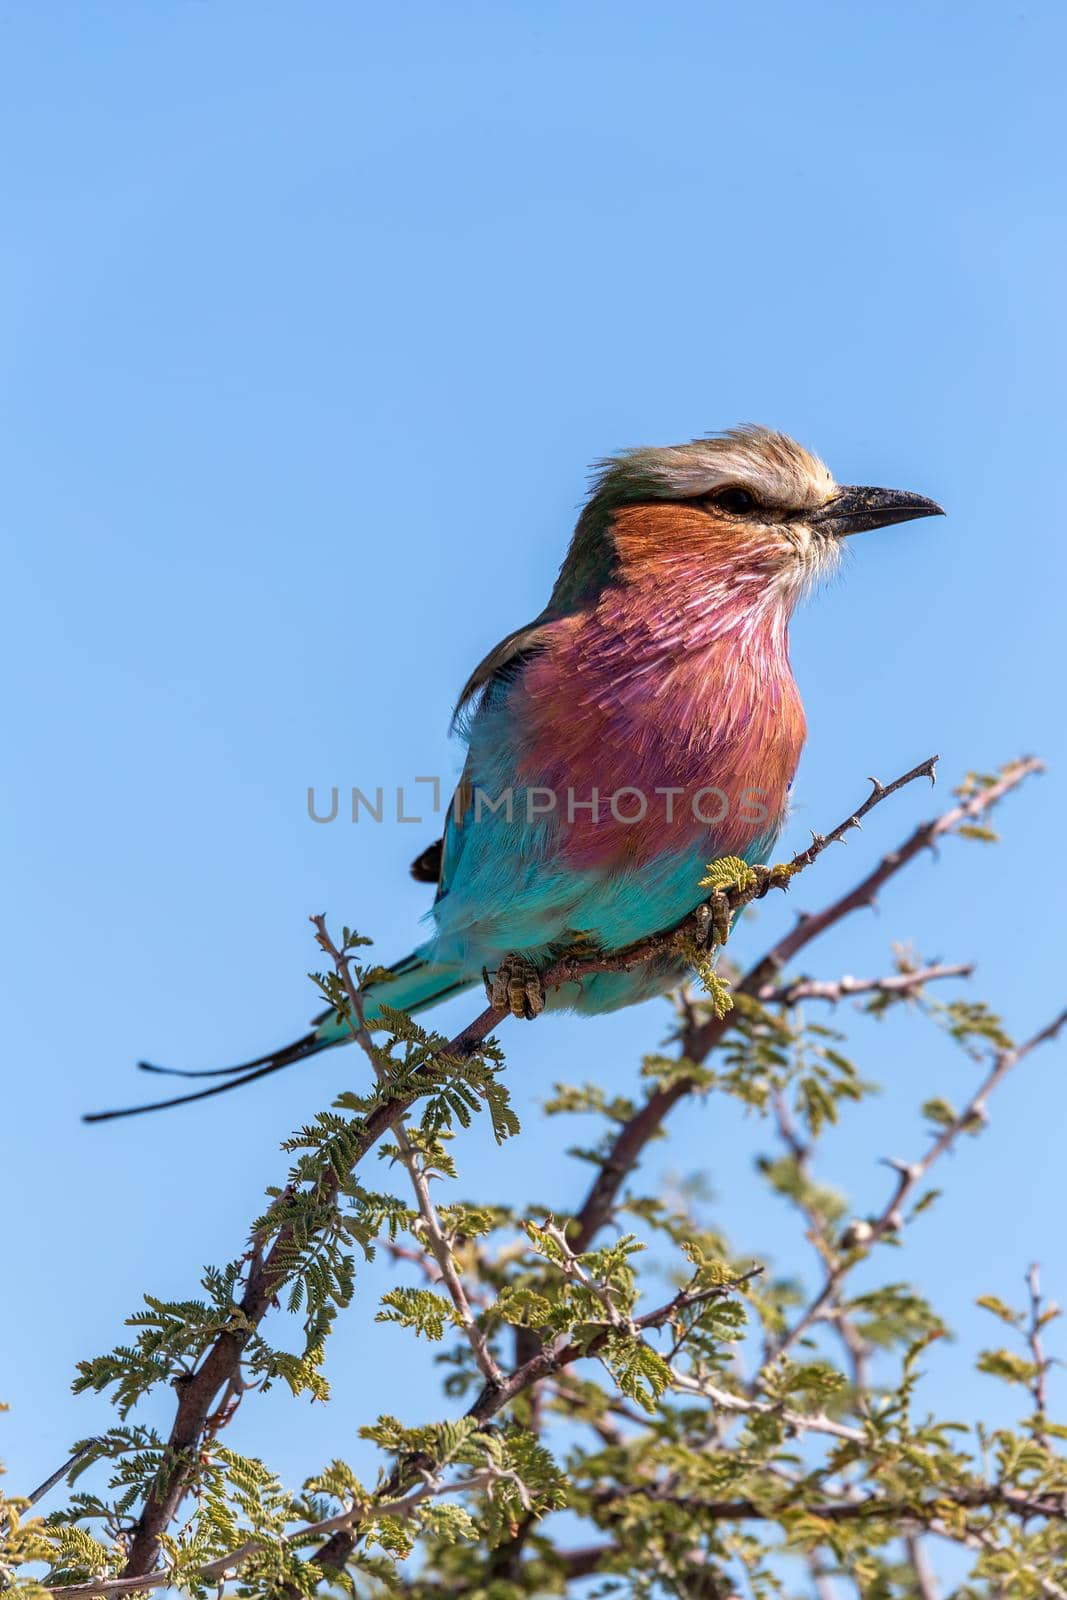 Lilac-brested roller, Coracias caudata, Beautiful colored bird in Etosha game reserve, Namibia safari and wildlife.